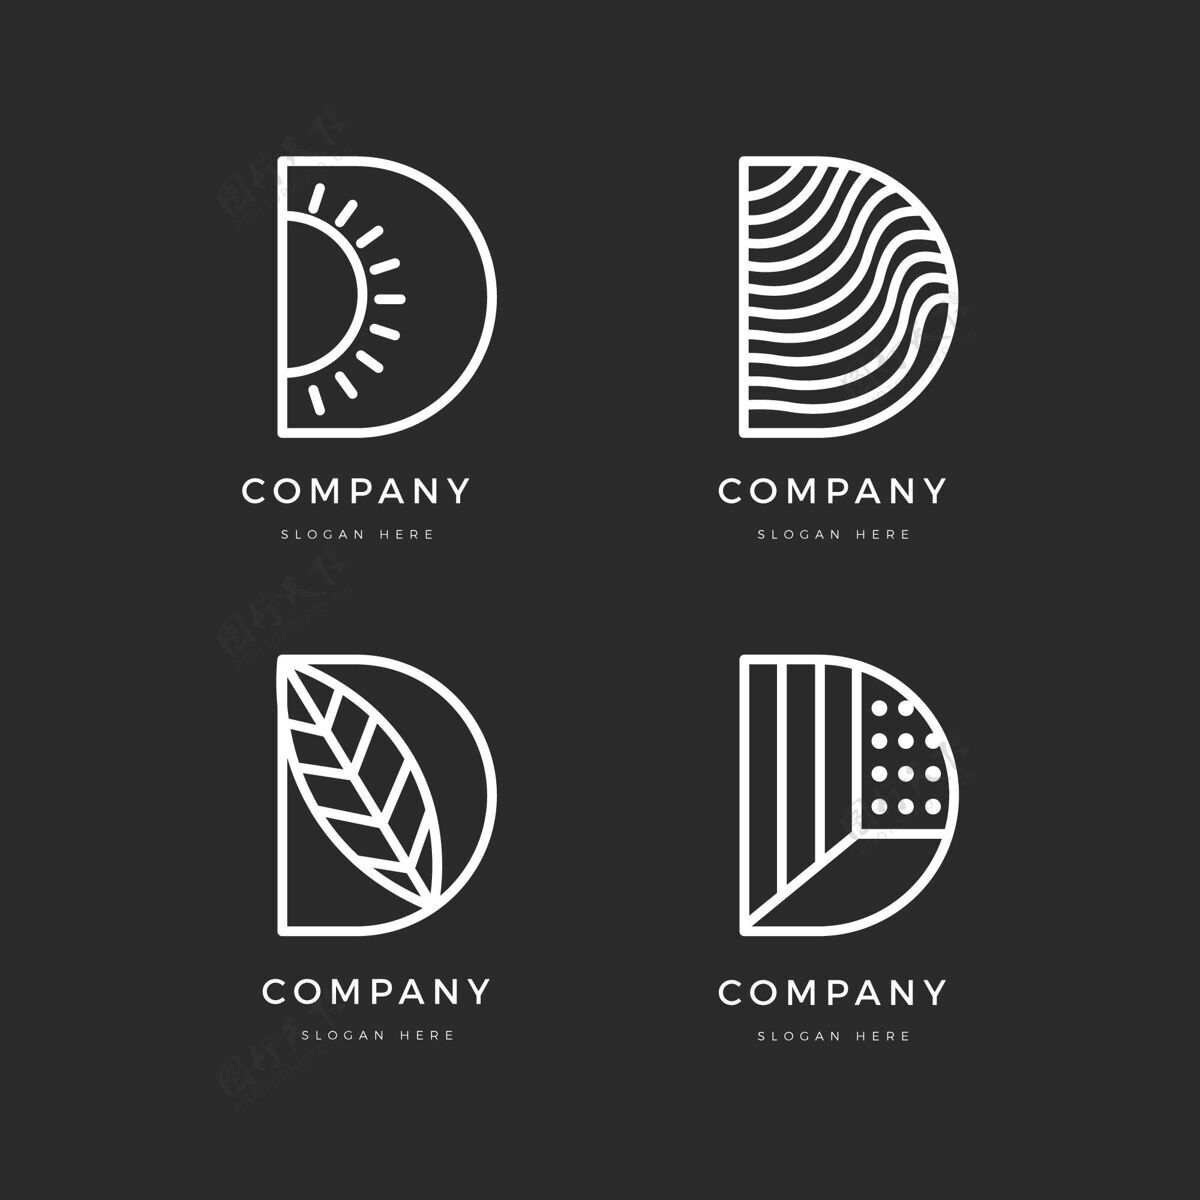 Corporate平面设计不同的d标志集企业标识标识企业标识